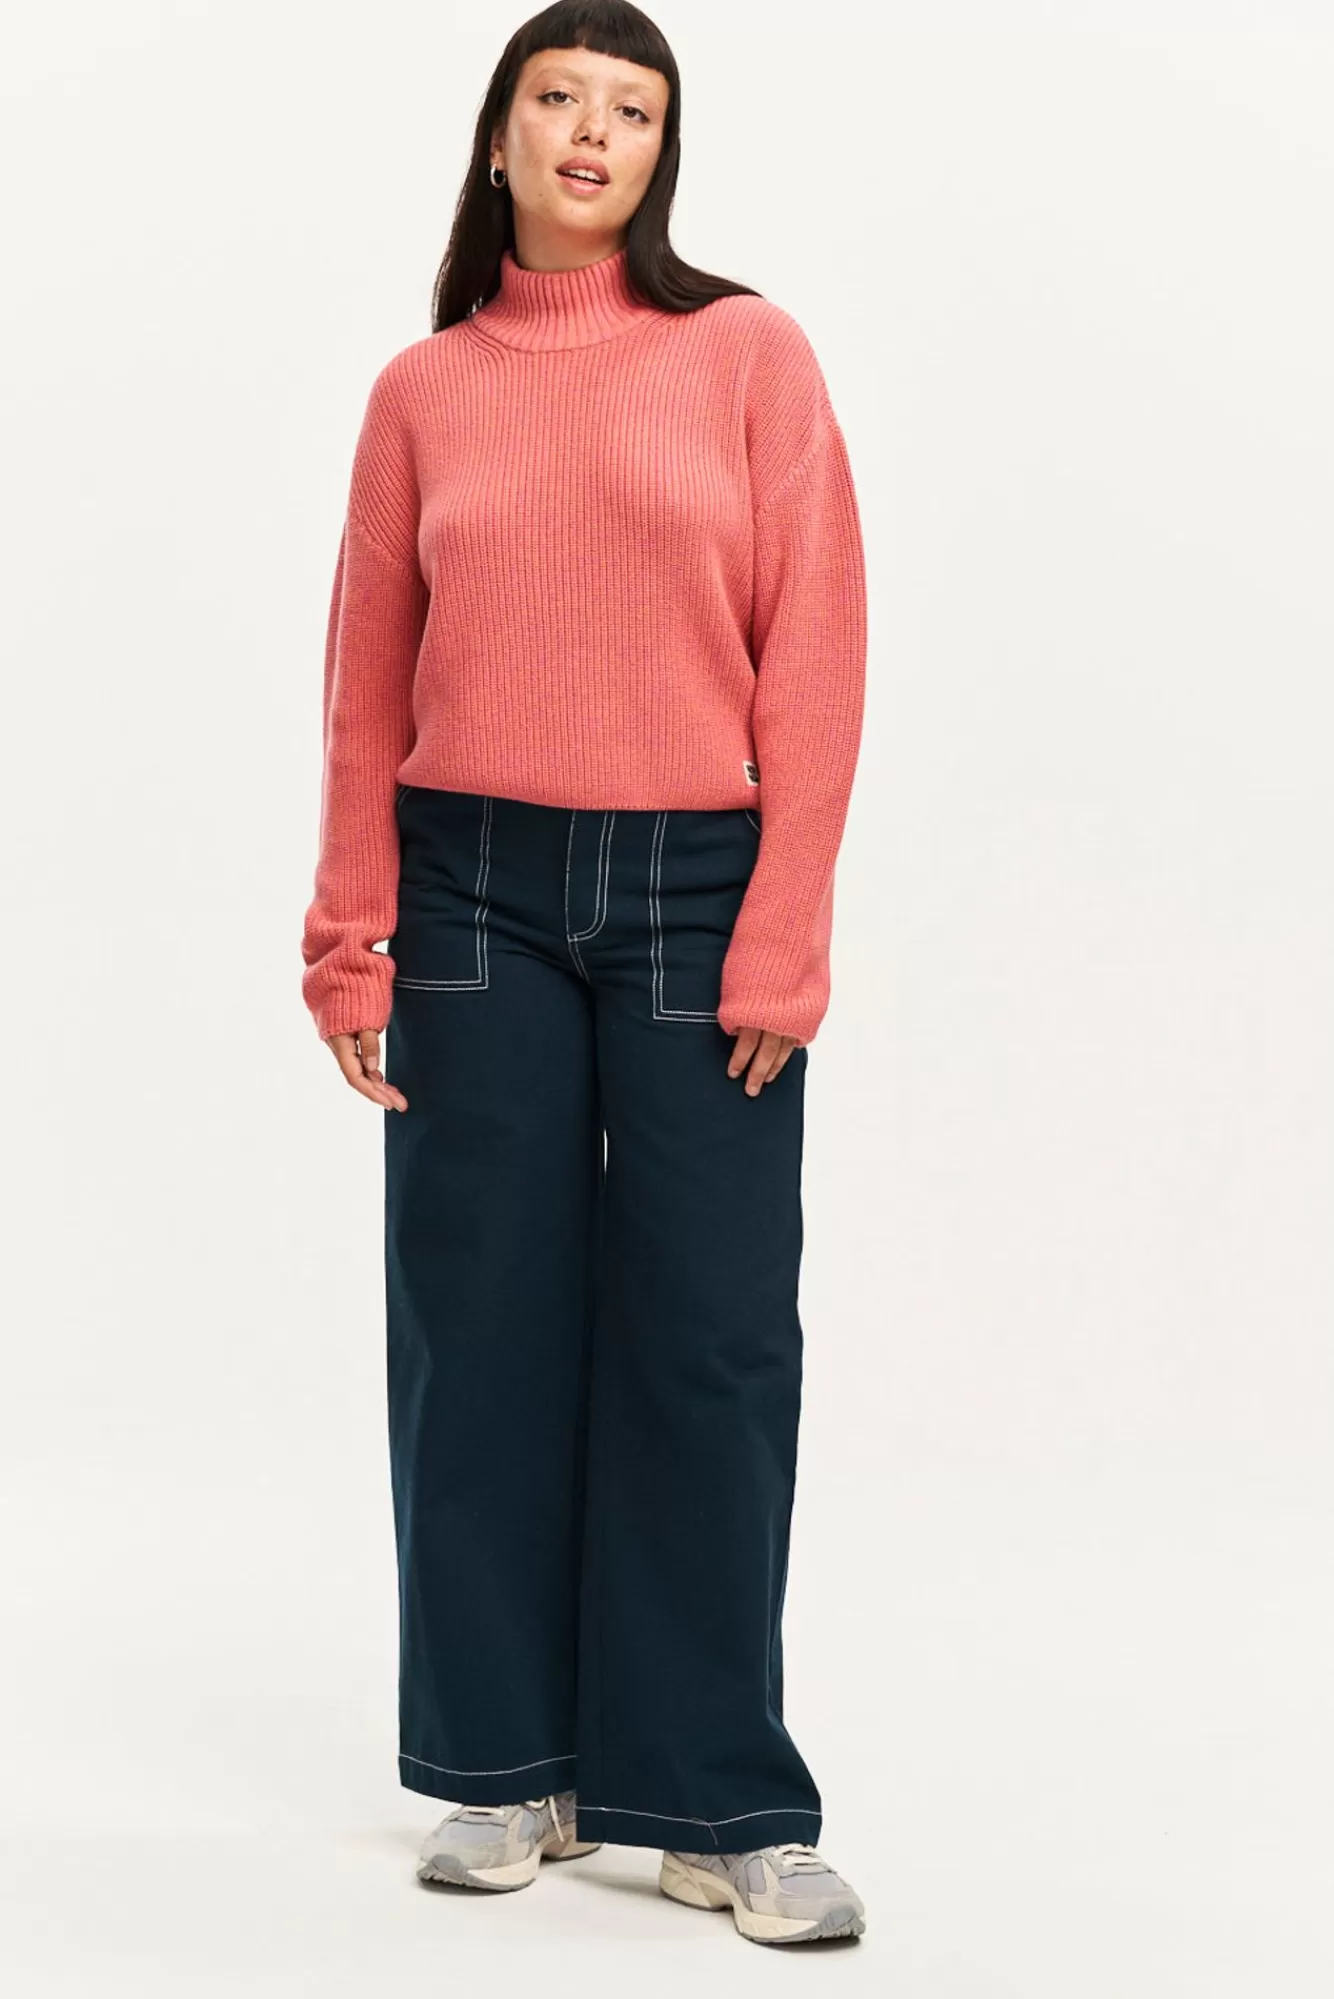 Toni Roll Neck Jumper: Organic Cotton - Twisted Raspberry-Lucy & Yak Fashion